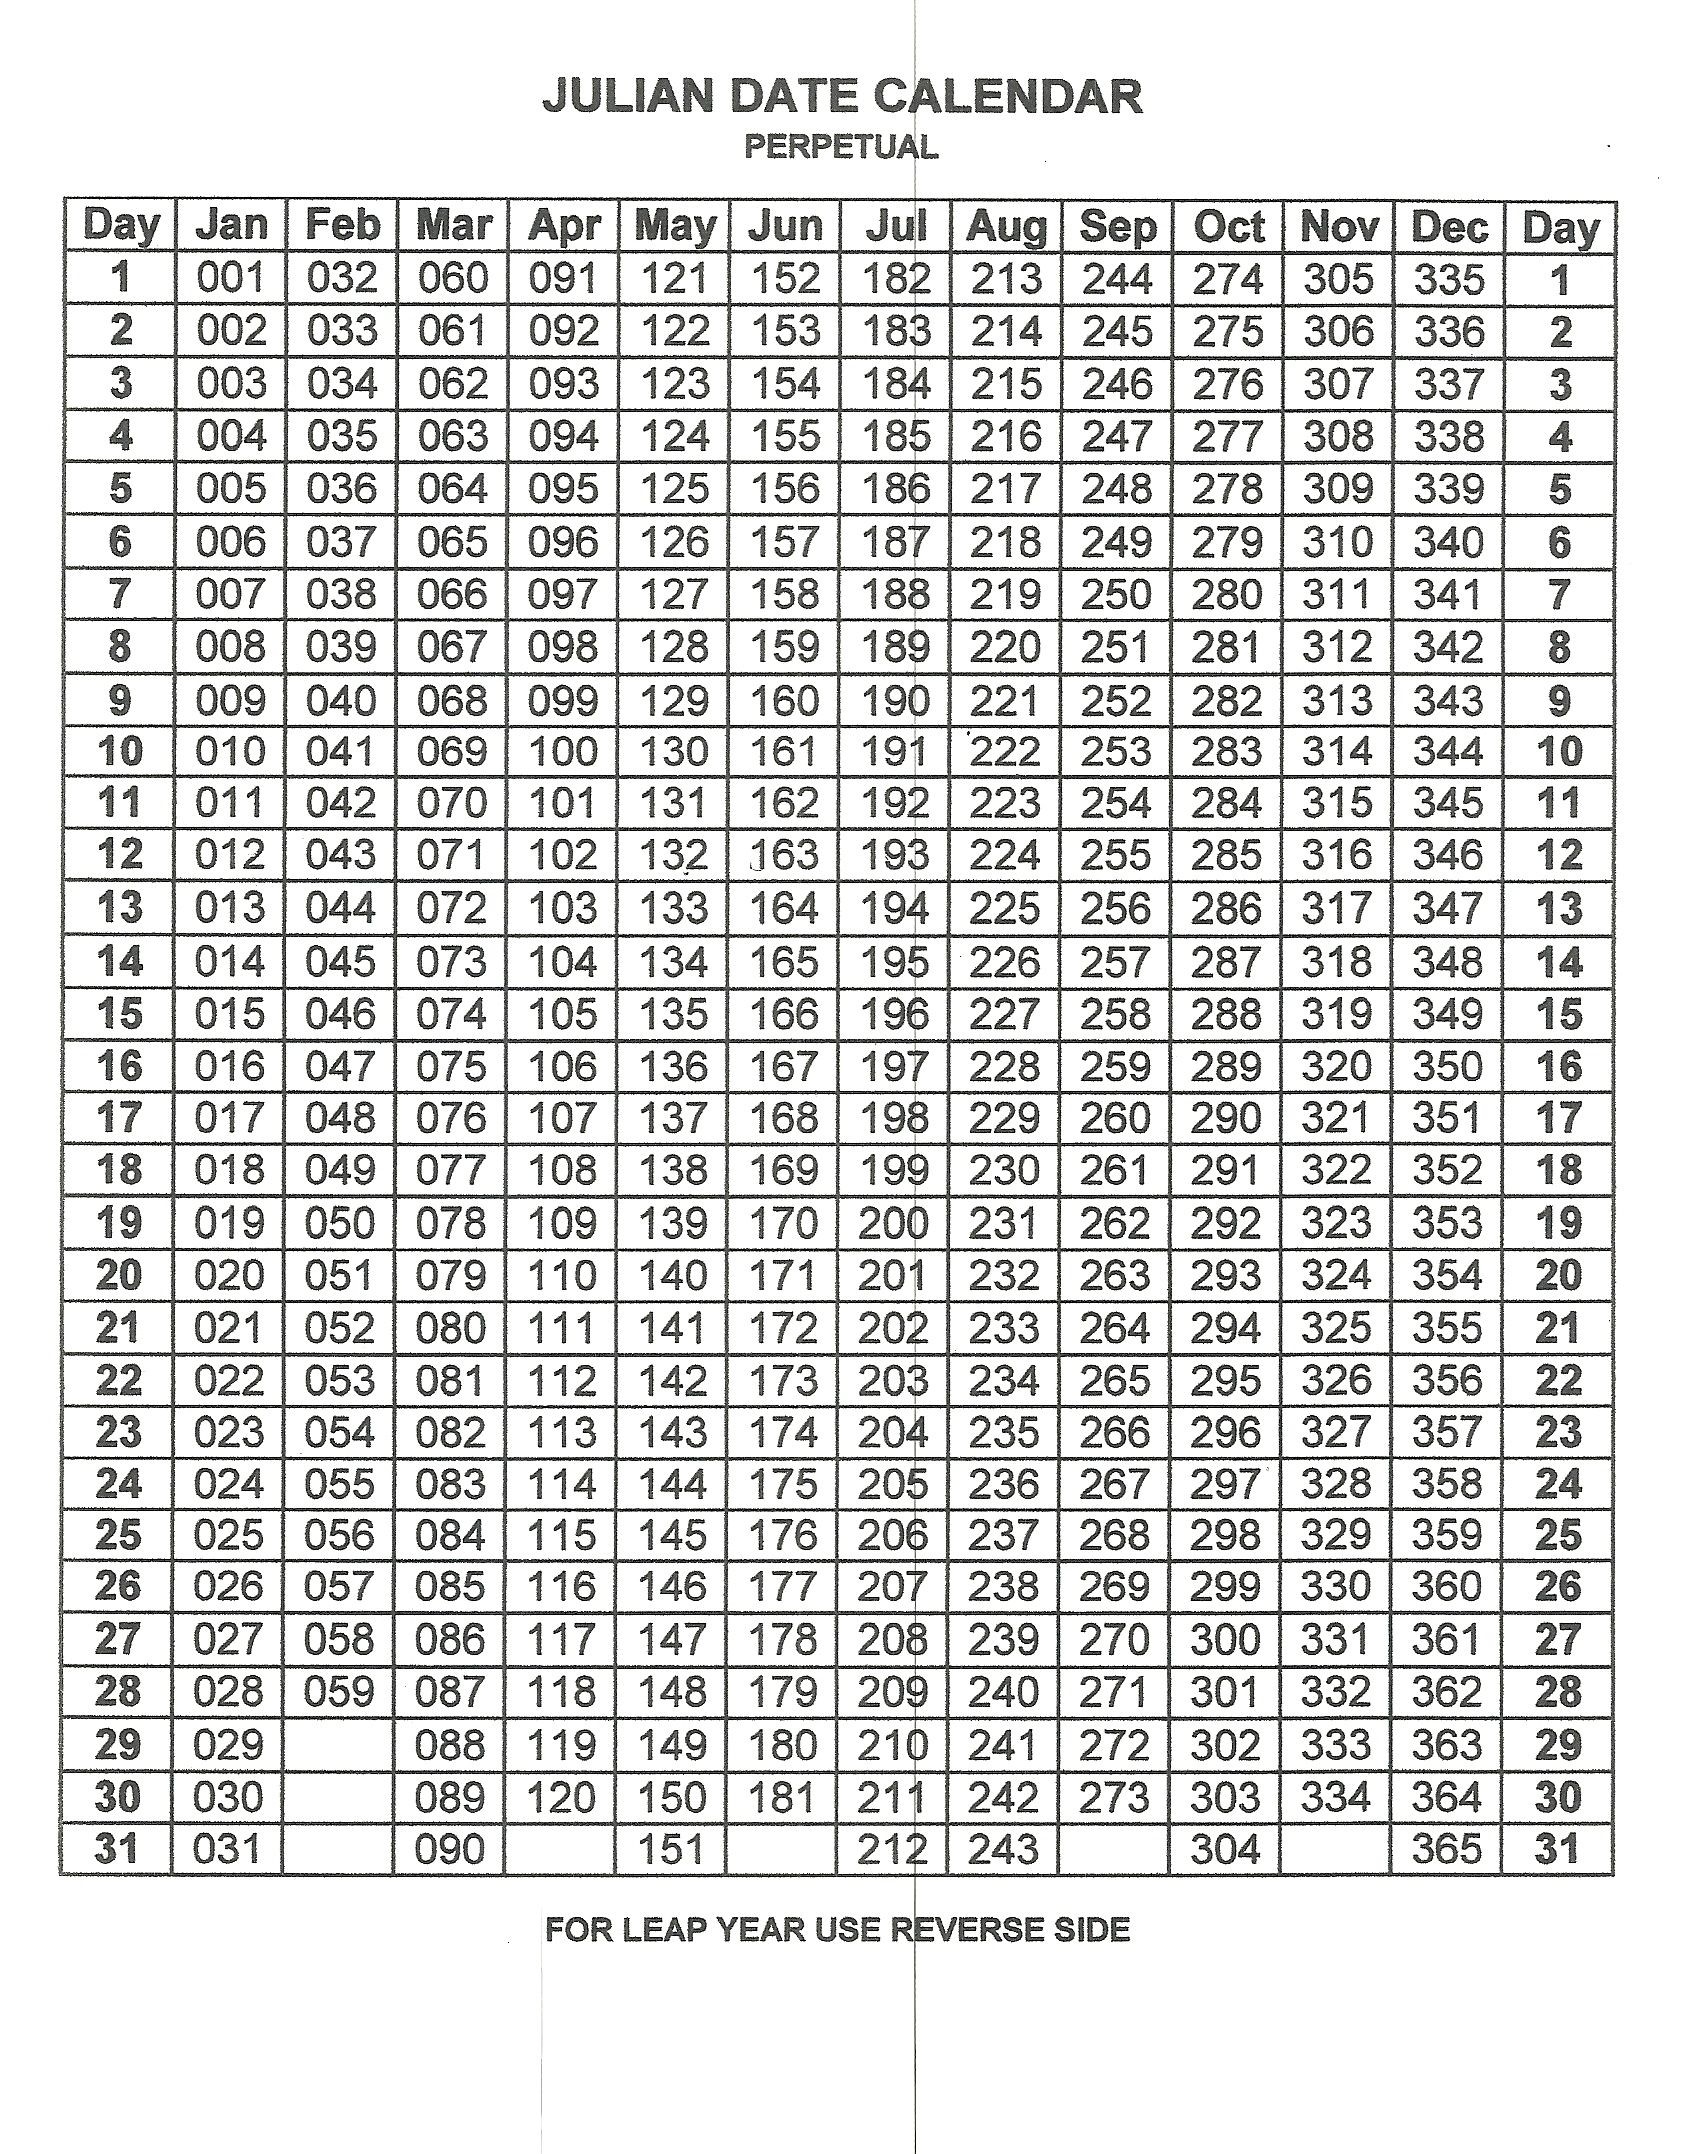 Perpetual Julian Date Calendar | Calendar Printables-Monthly Calendar With Julian Dates 2020